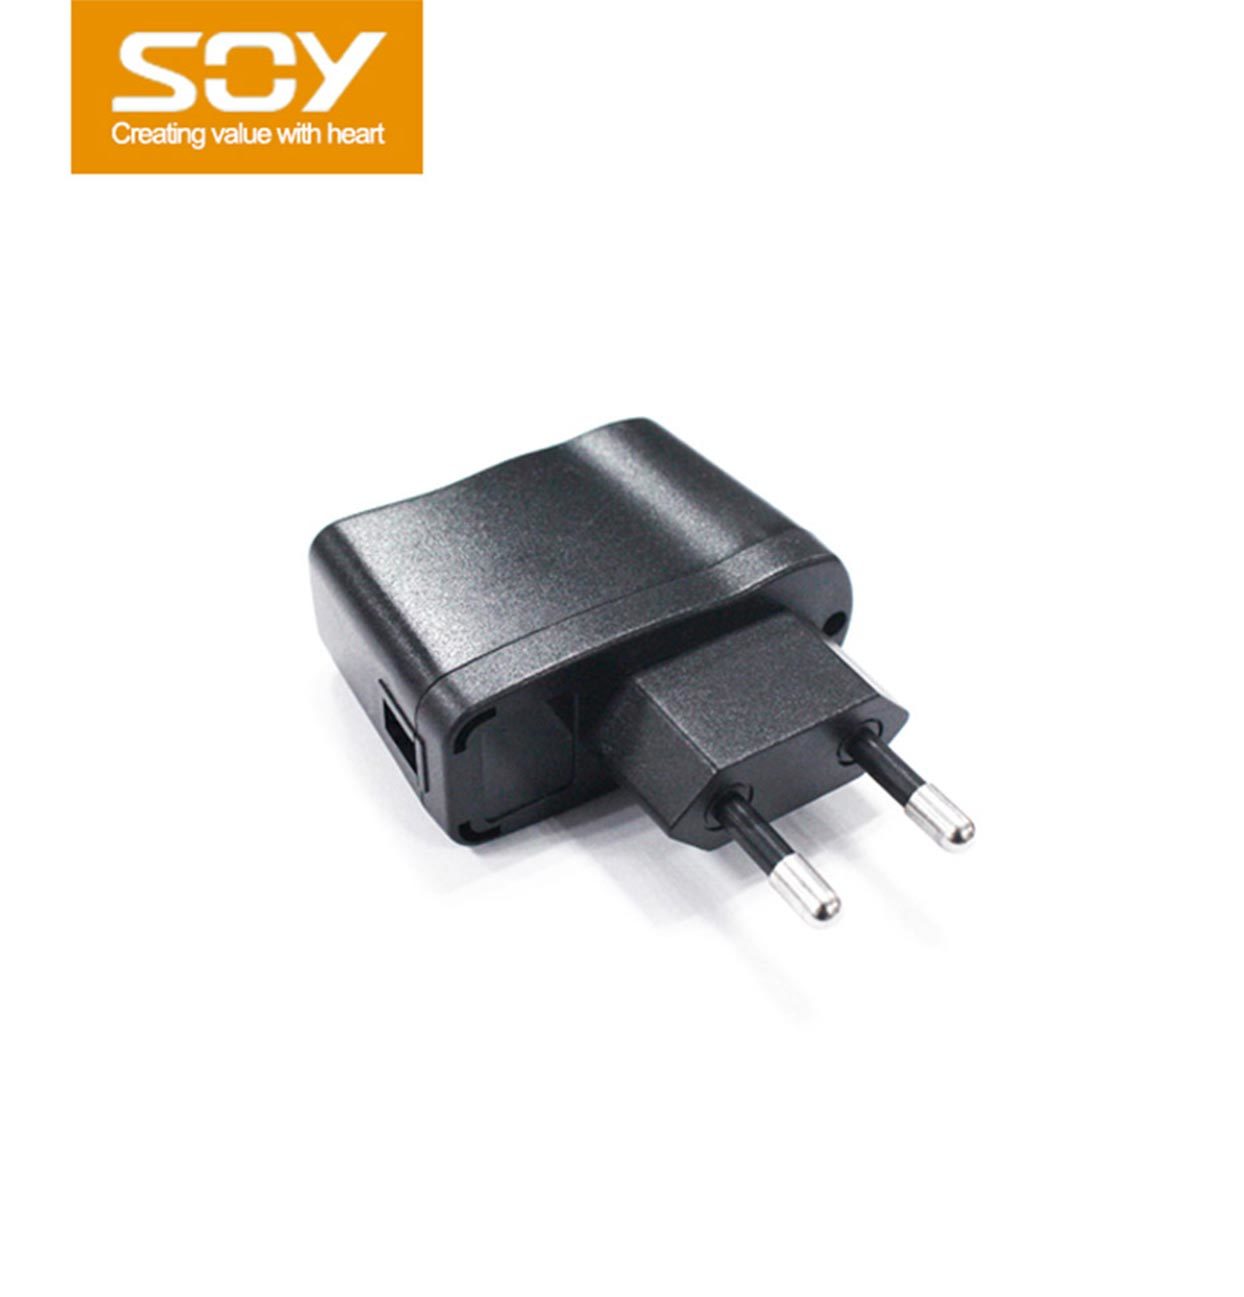 5V1A欧规USB电源适配器